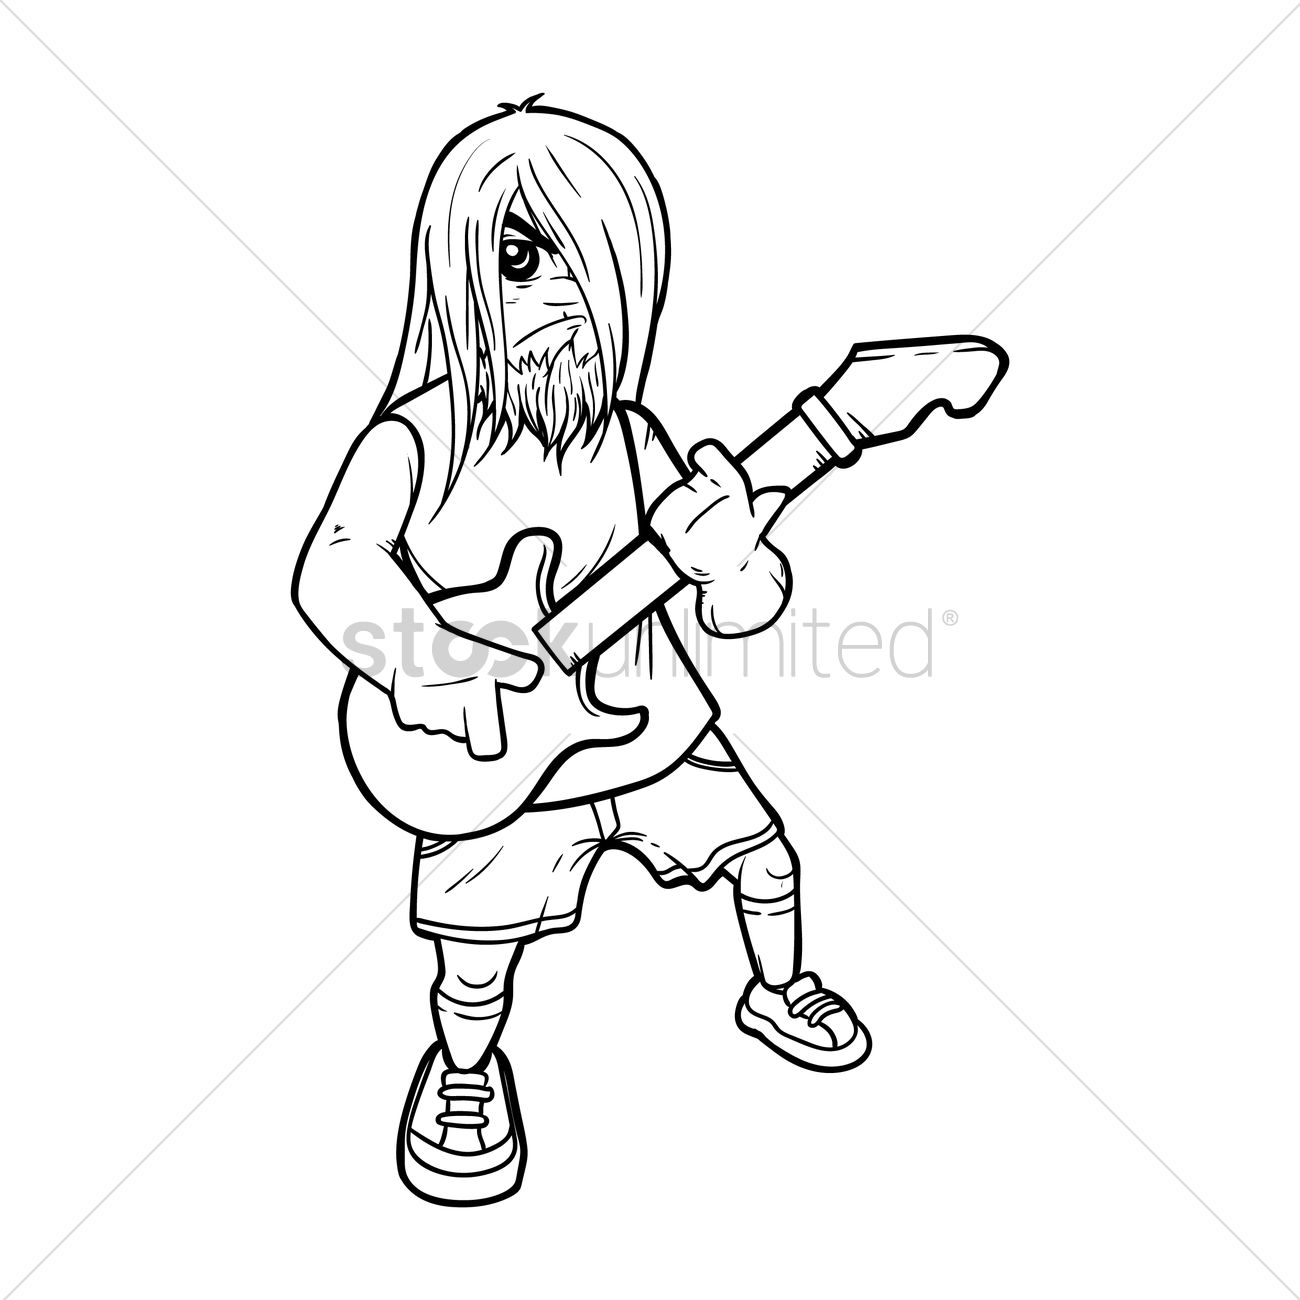 Man Playing Guitar Drawing at GetDrawings Free download